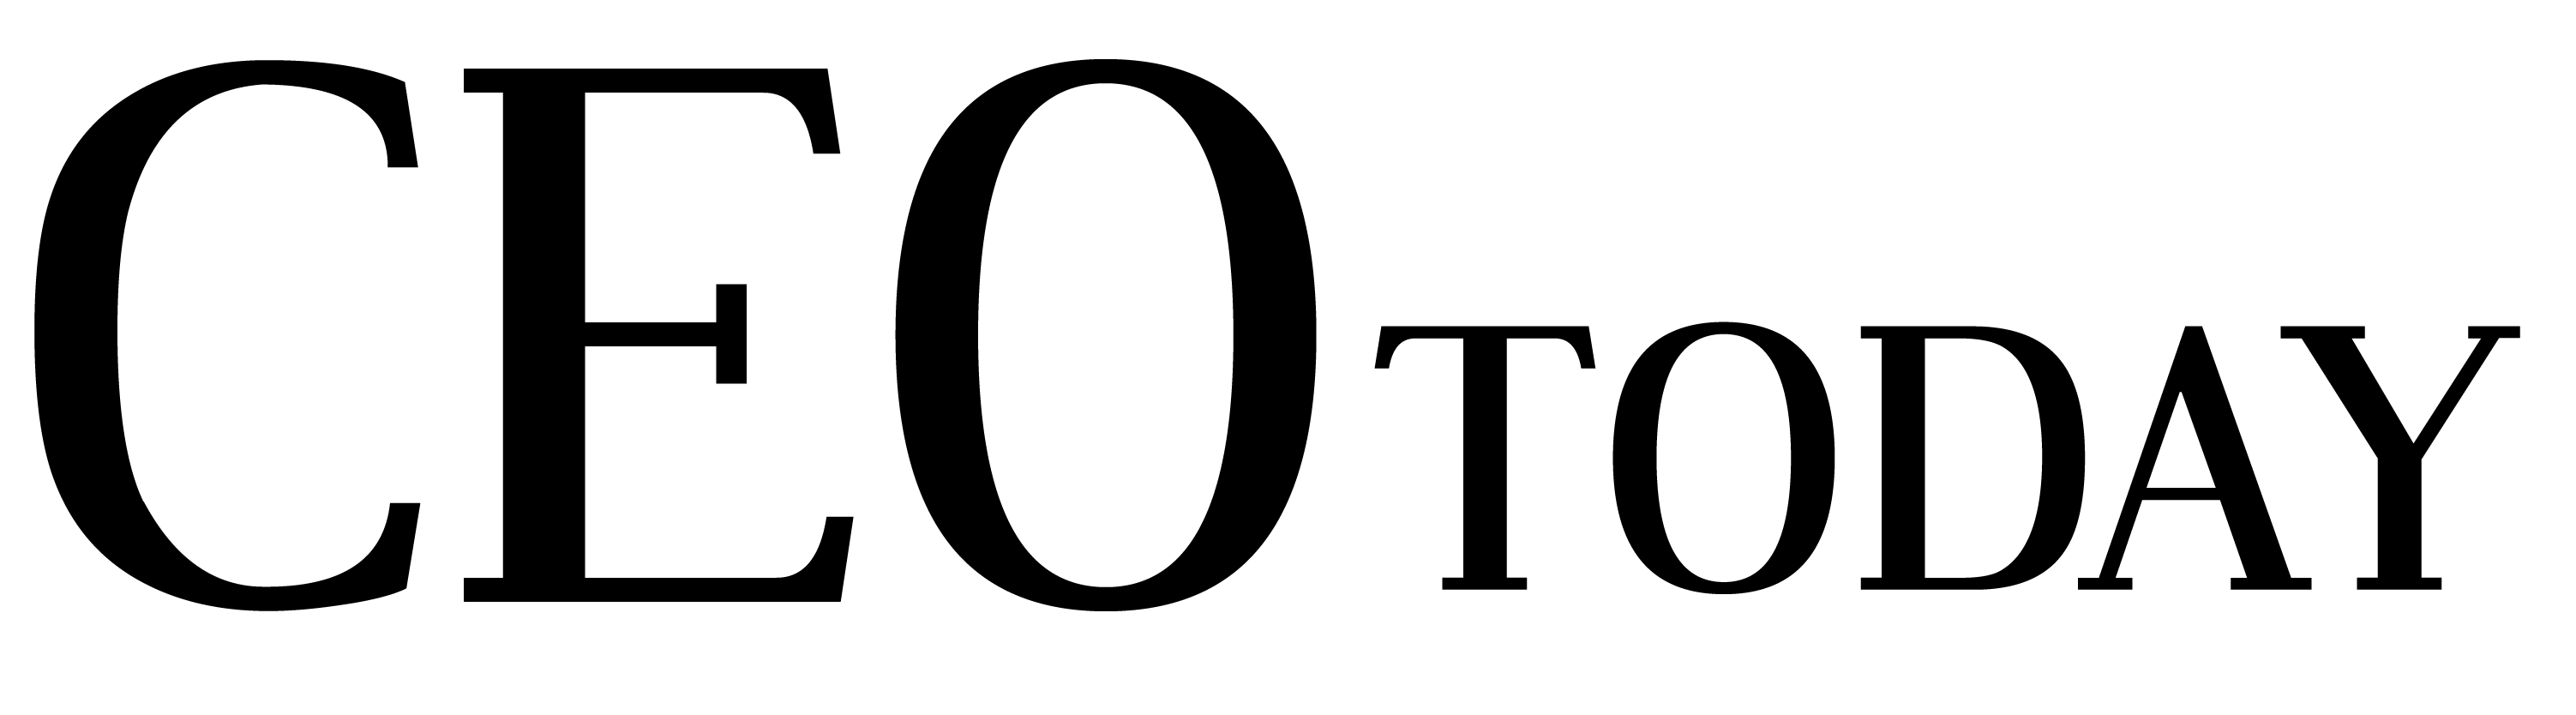 Logo ceotoday